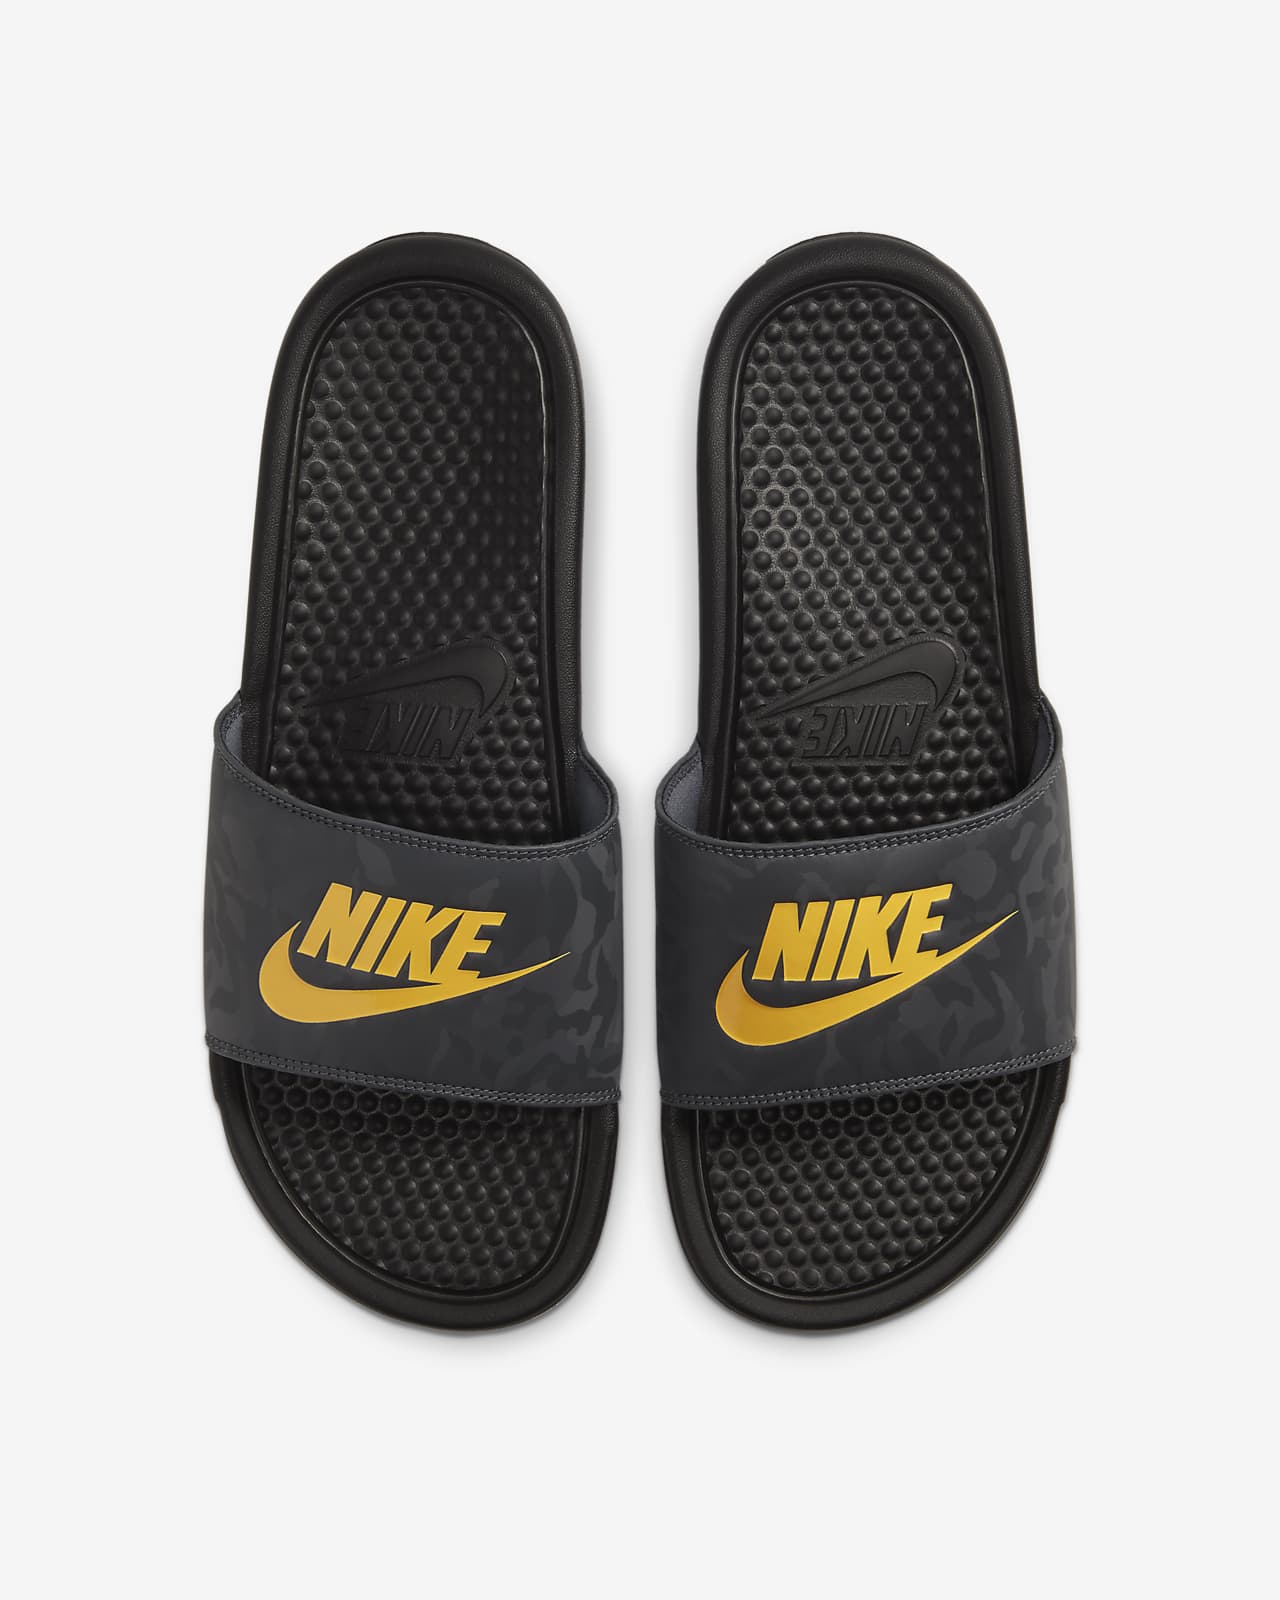 man sandals 2020